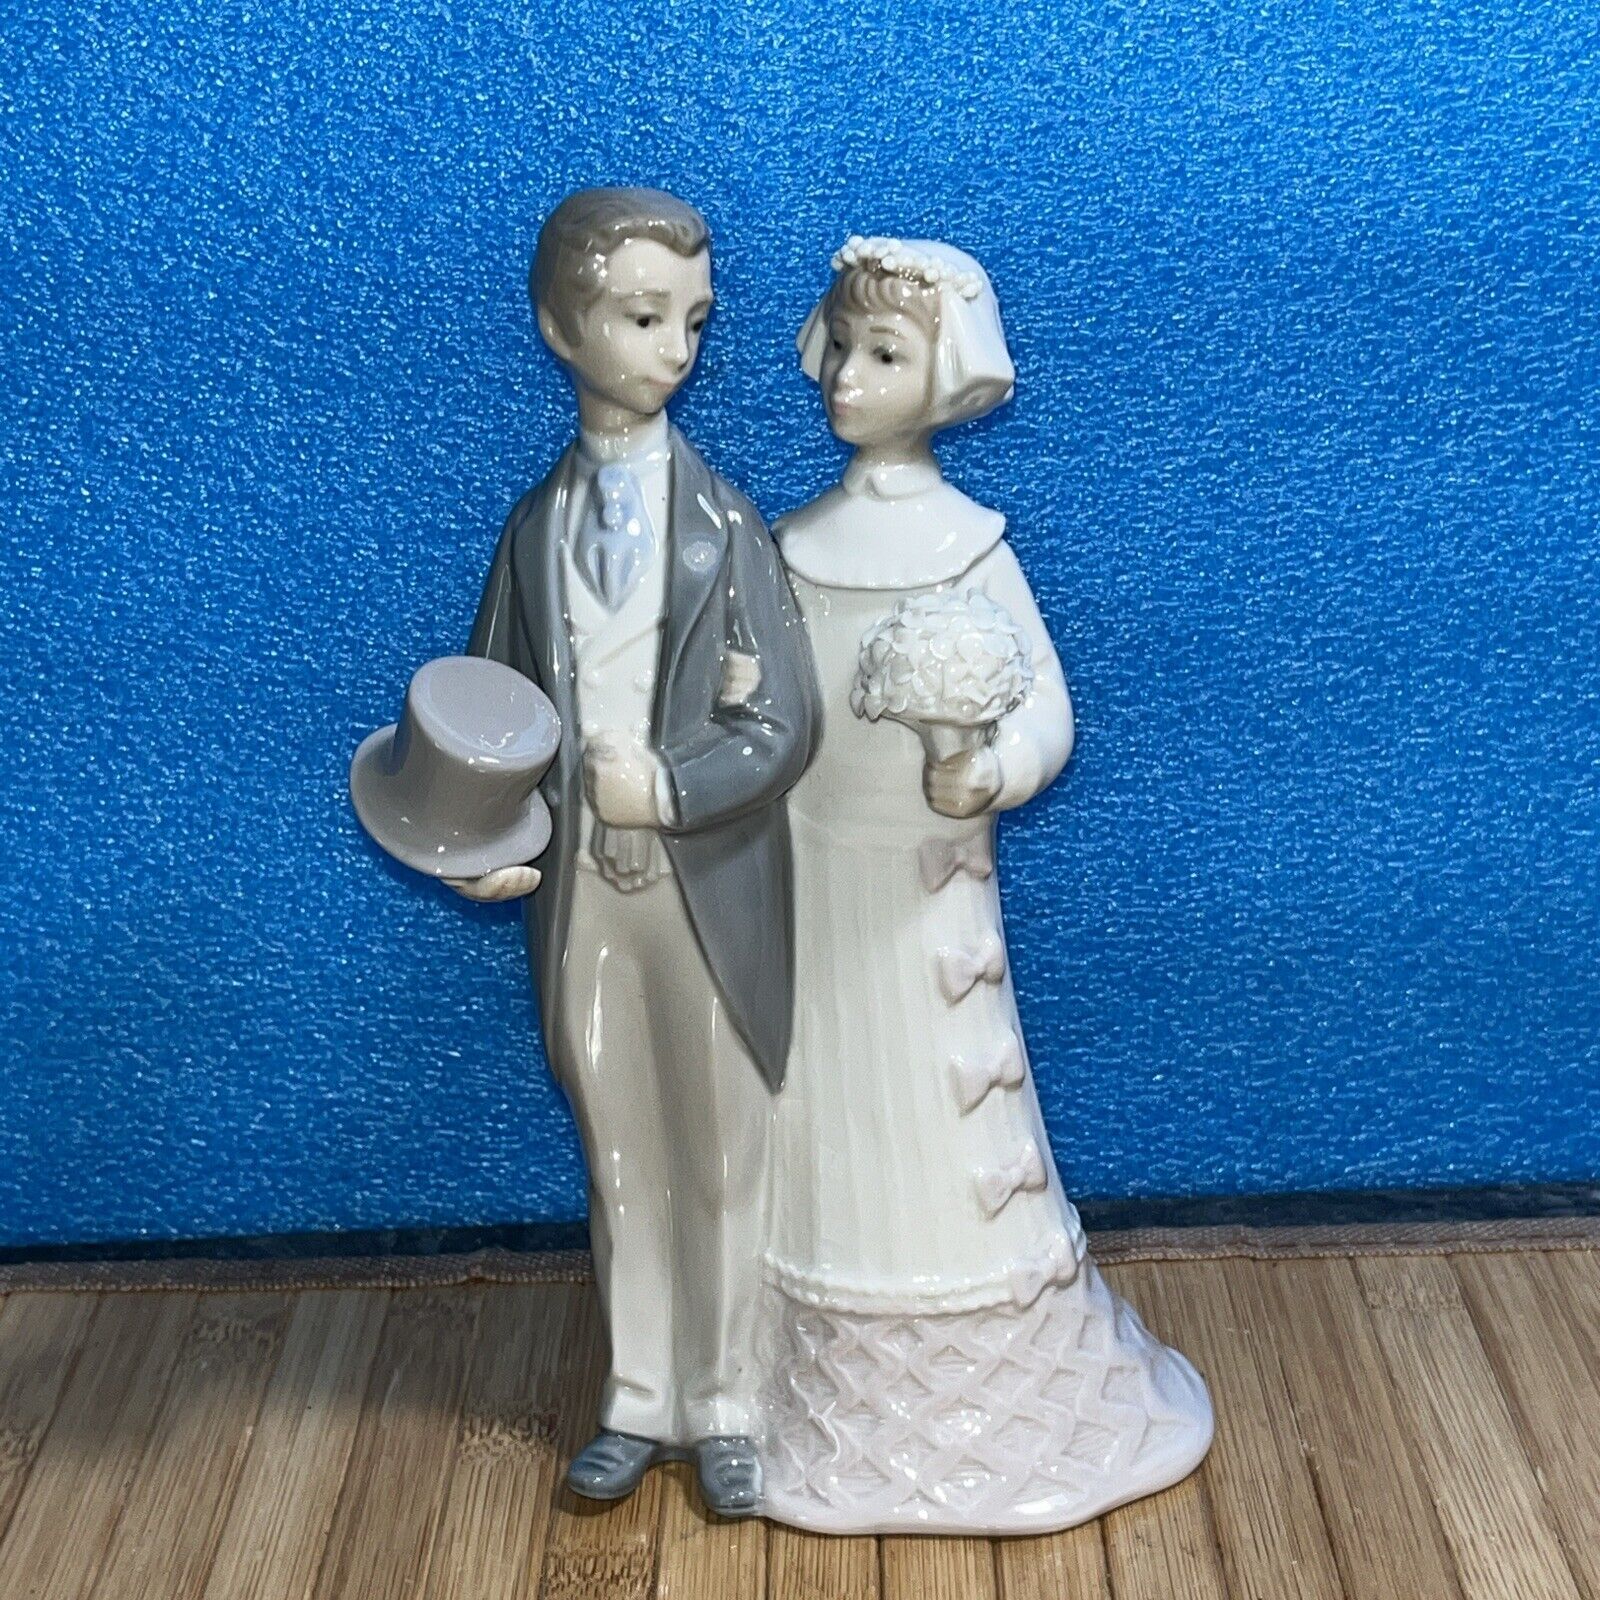 Vintage Lladro porcelain figurine 4808 bride and groom couple married excellent